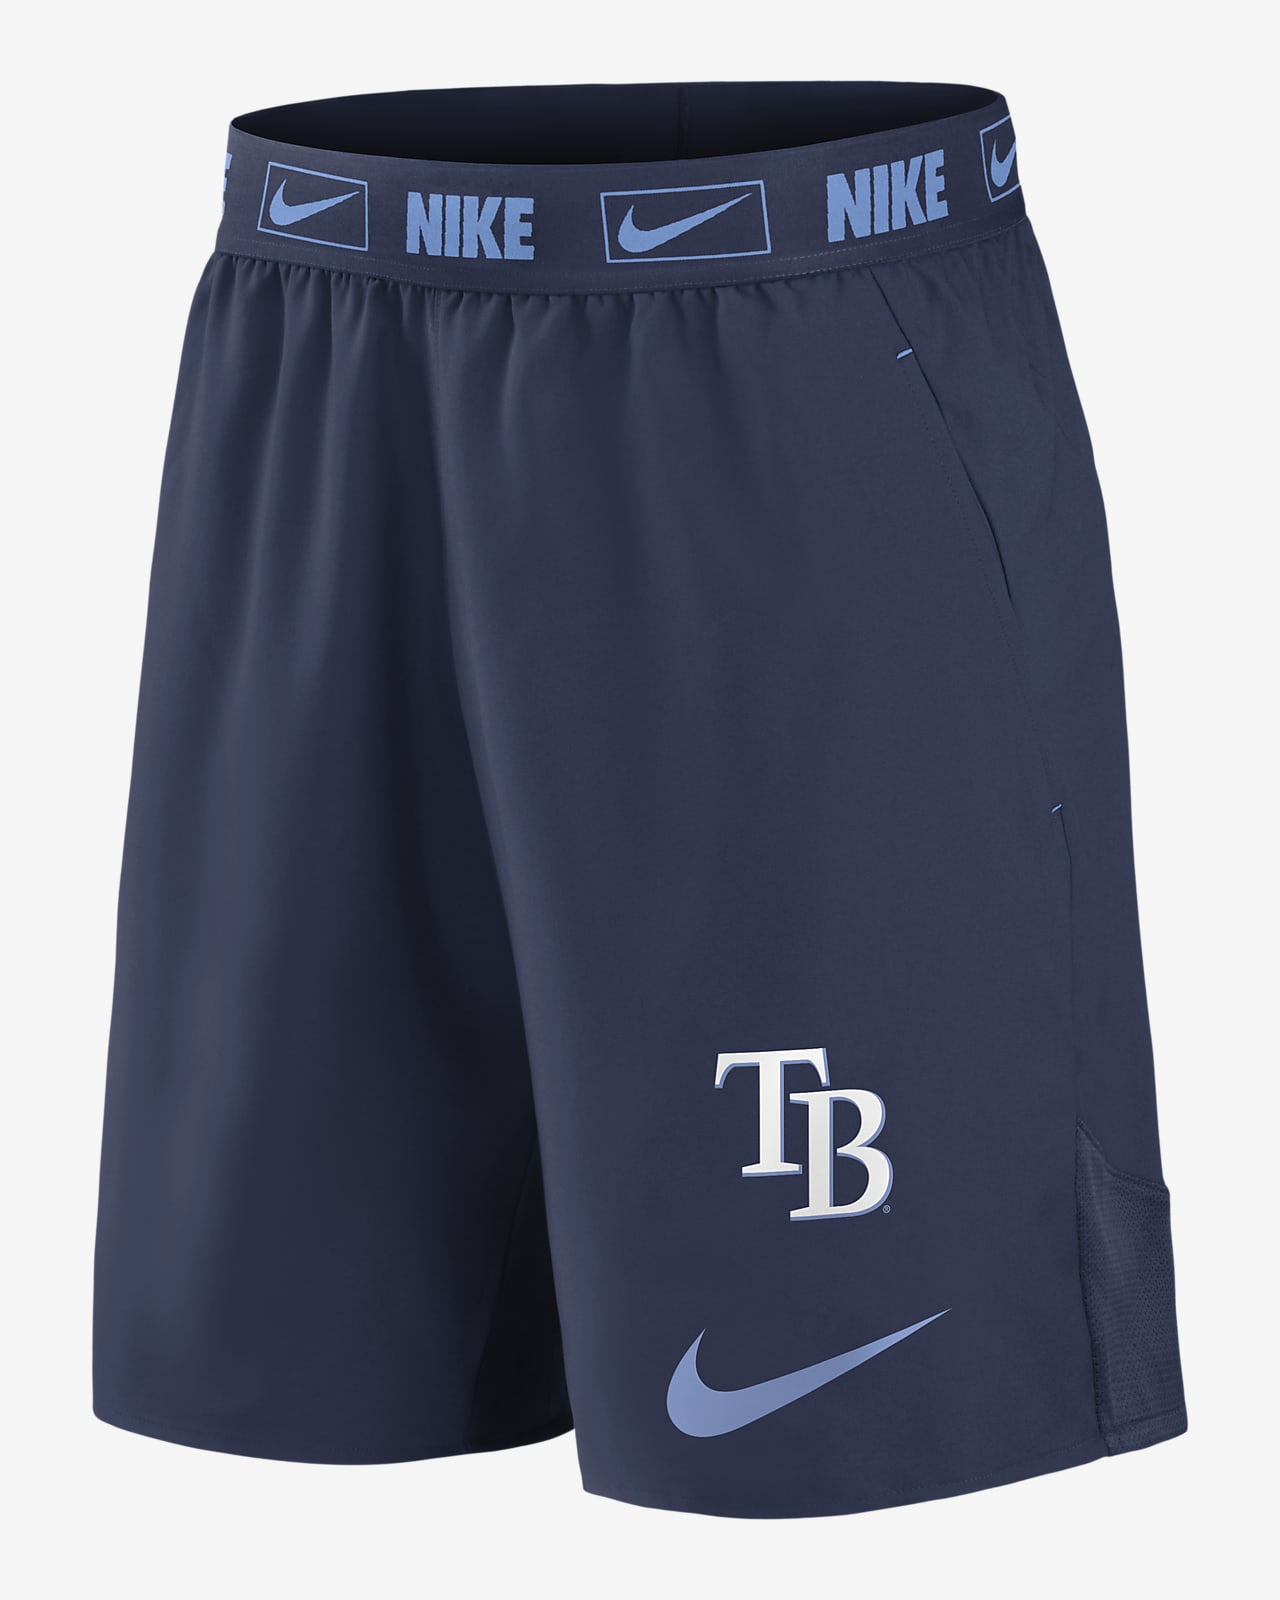 Nike Dri-FIT Flex (MLB Detroit Tigers) Men's Shorts.